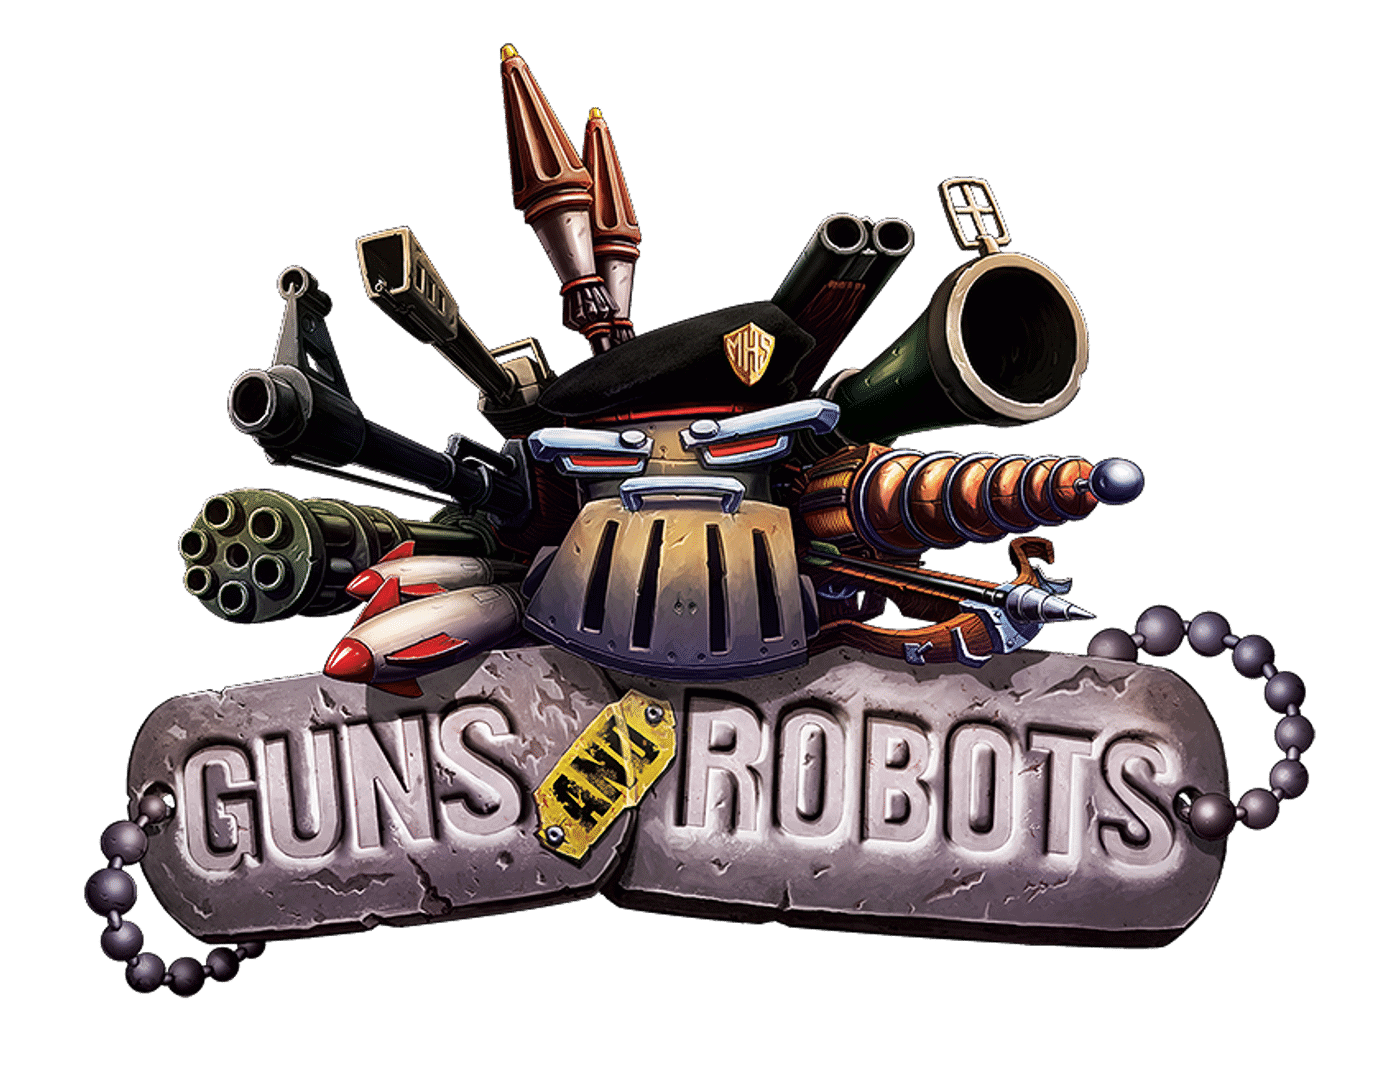 Guns and Robots